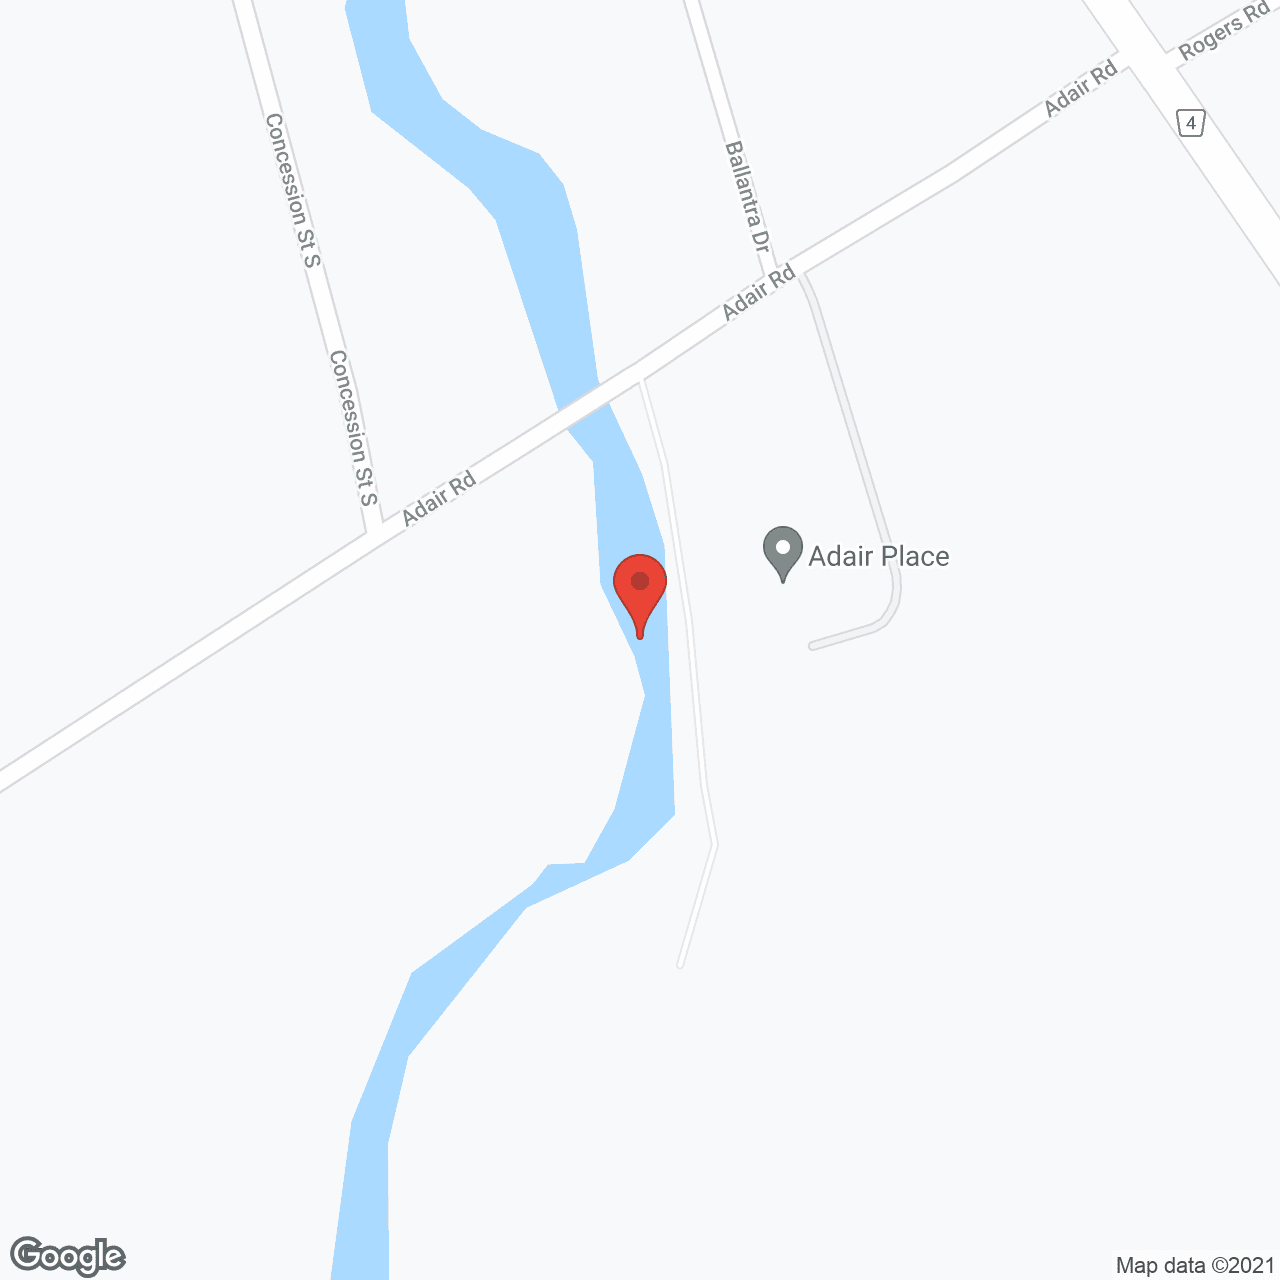 Adair Place in google map